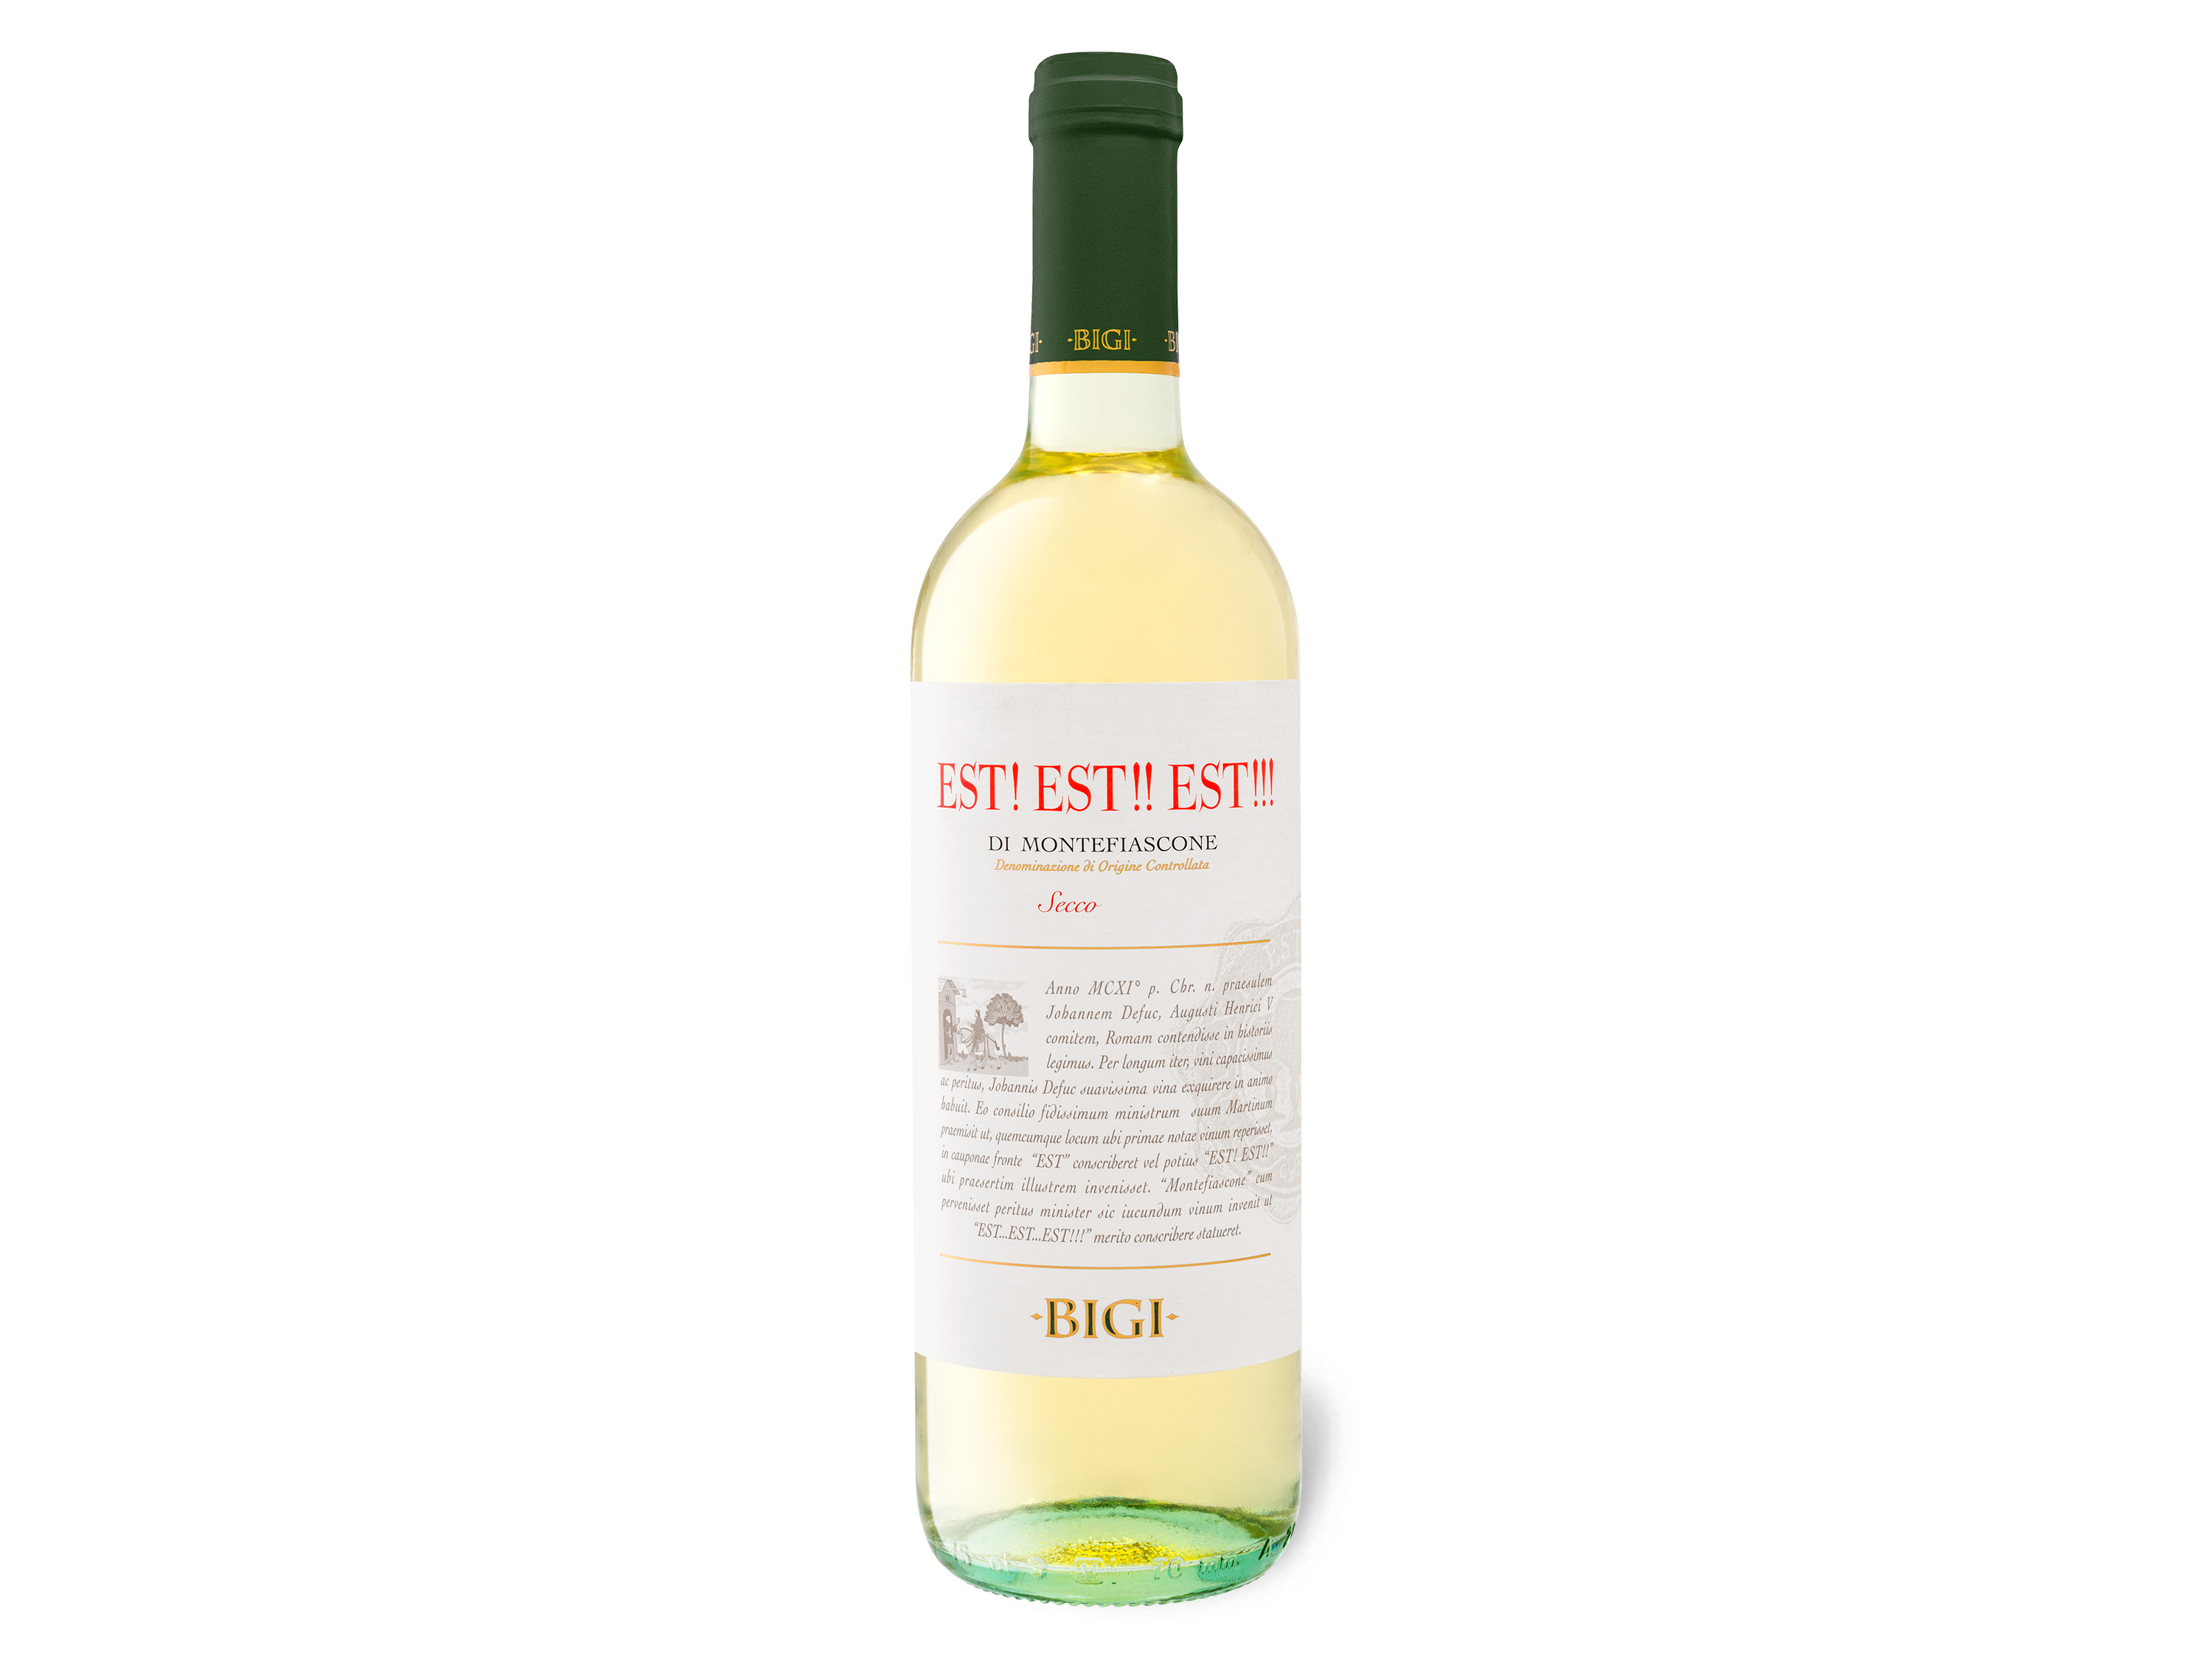 Bigi Est! Est!! Est!!! Di Montefiascone DOC trocken, Weißwein 2022 Wein & Spirituosen Lidl DE